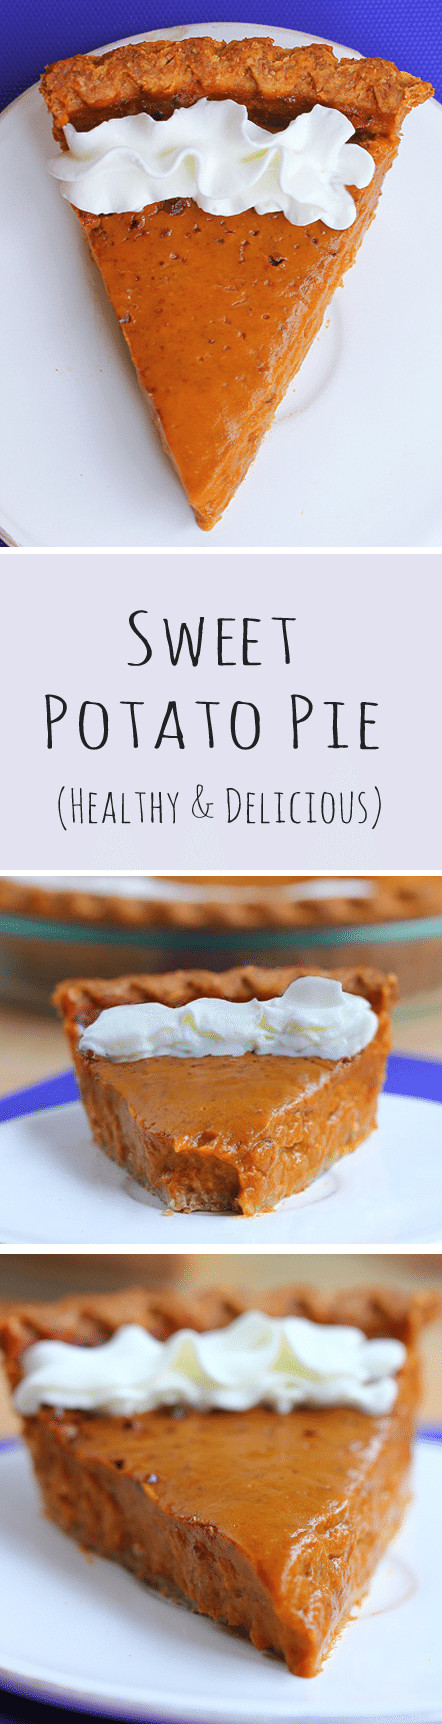 Healthy Sweet Potato Pie Recipe
 Healthy Sweet Potato Pie with homemade pie crust